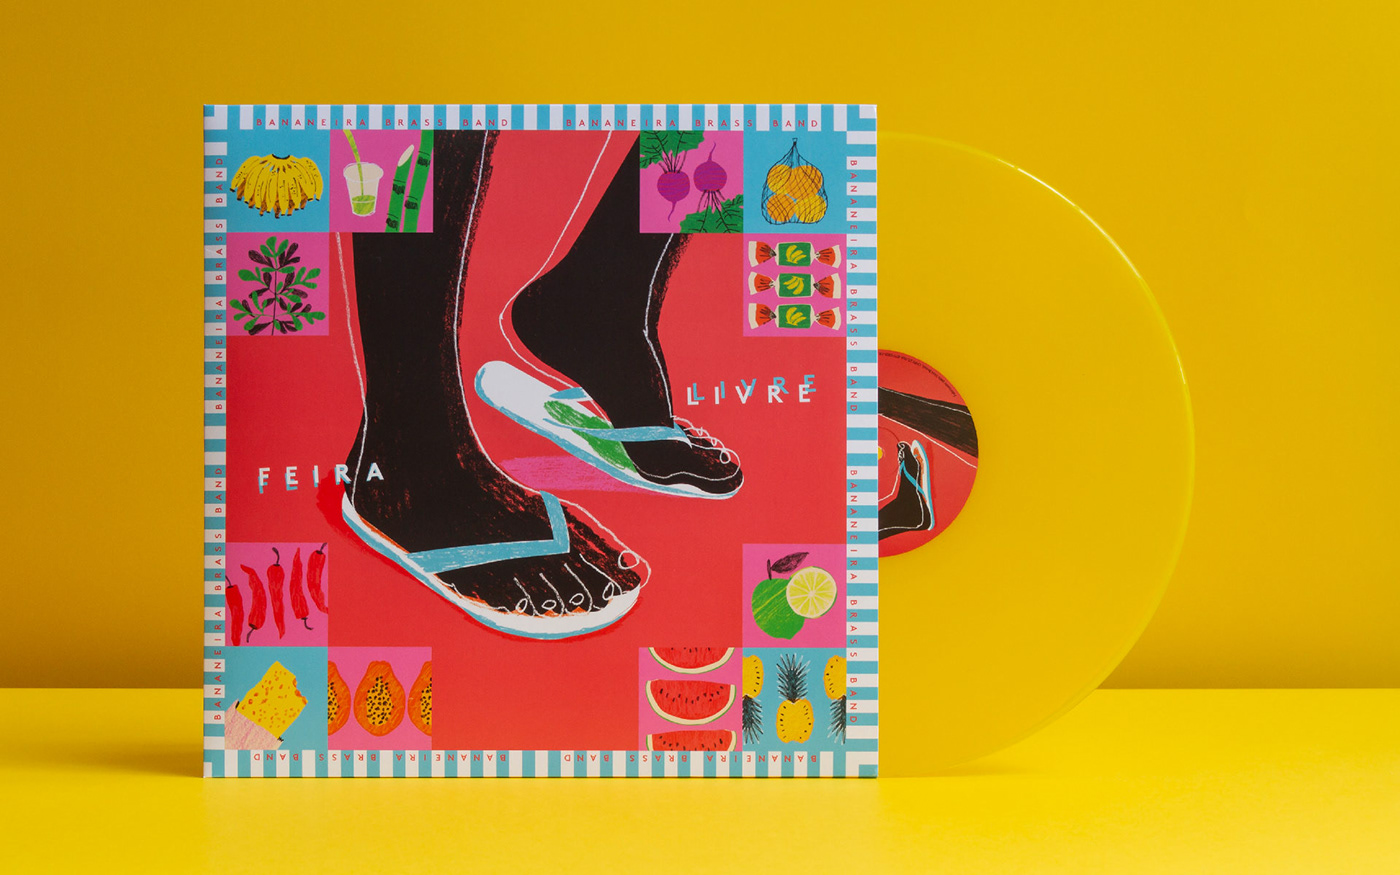 vinyl record album cover brazilian music brass band estandarte dança amarelo cd record sleeve